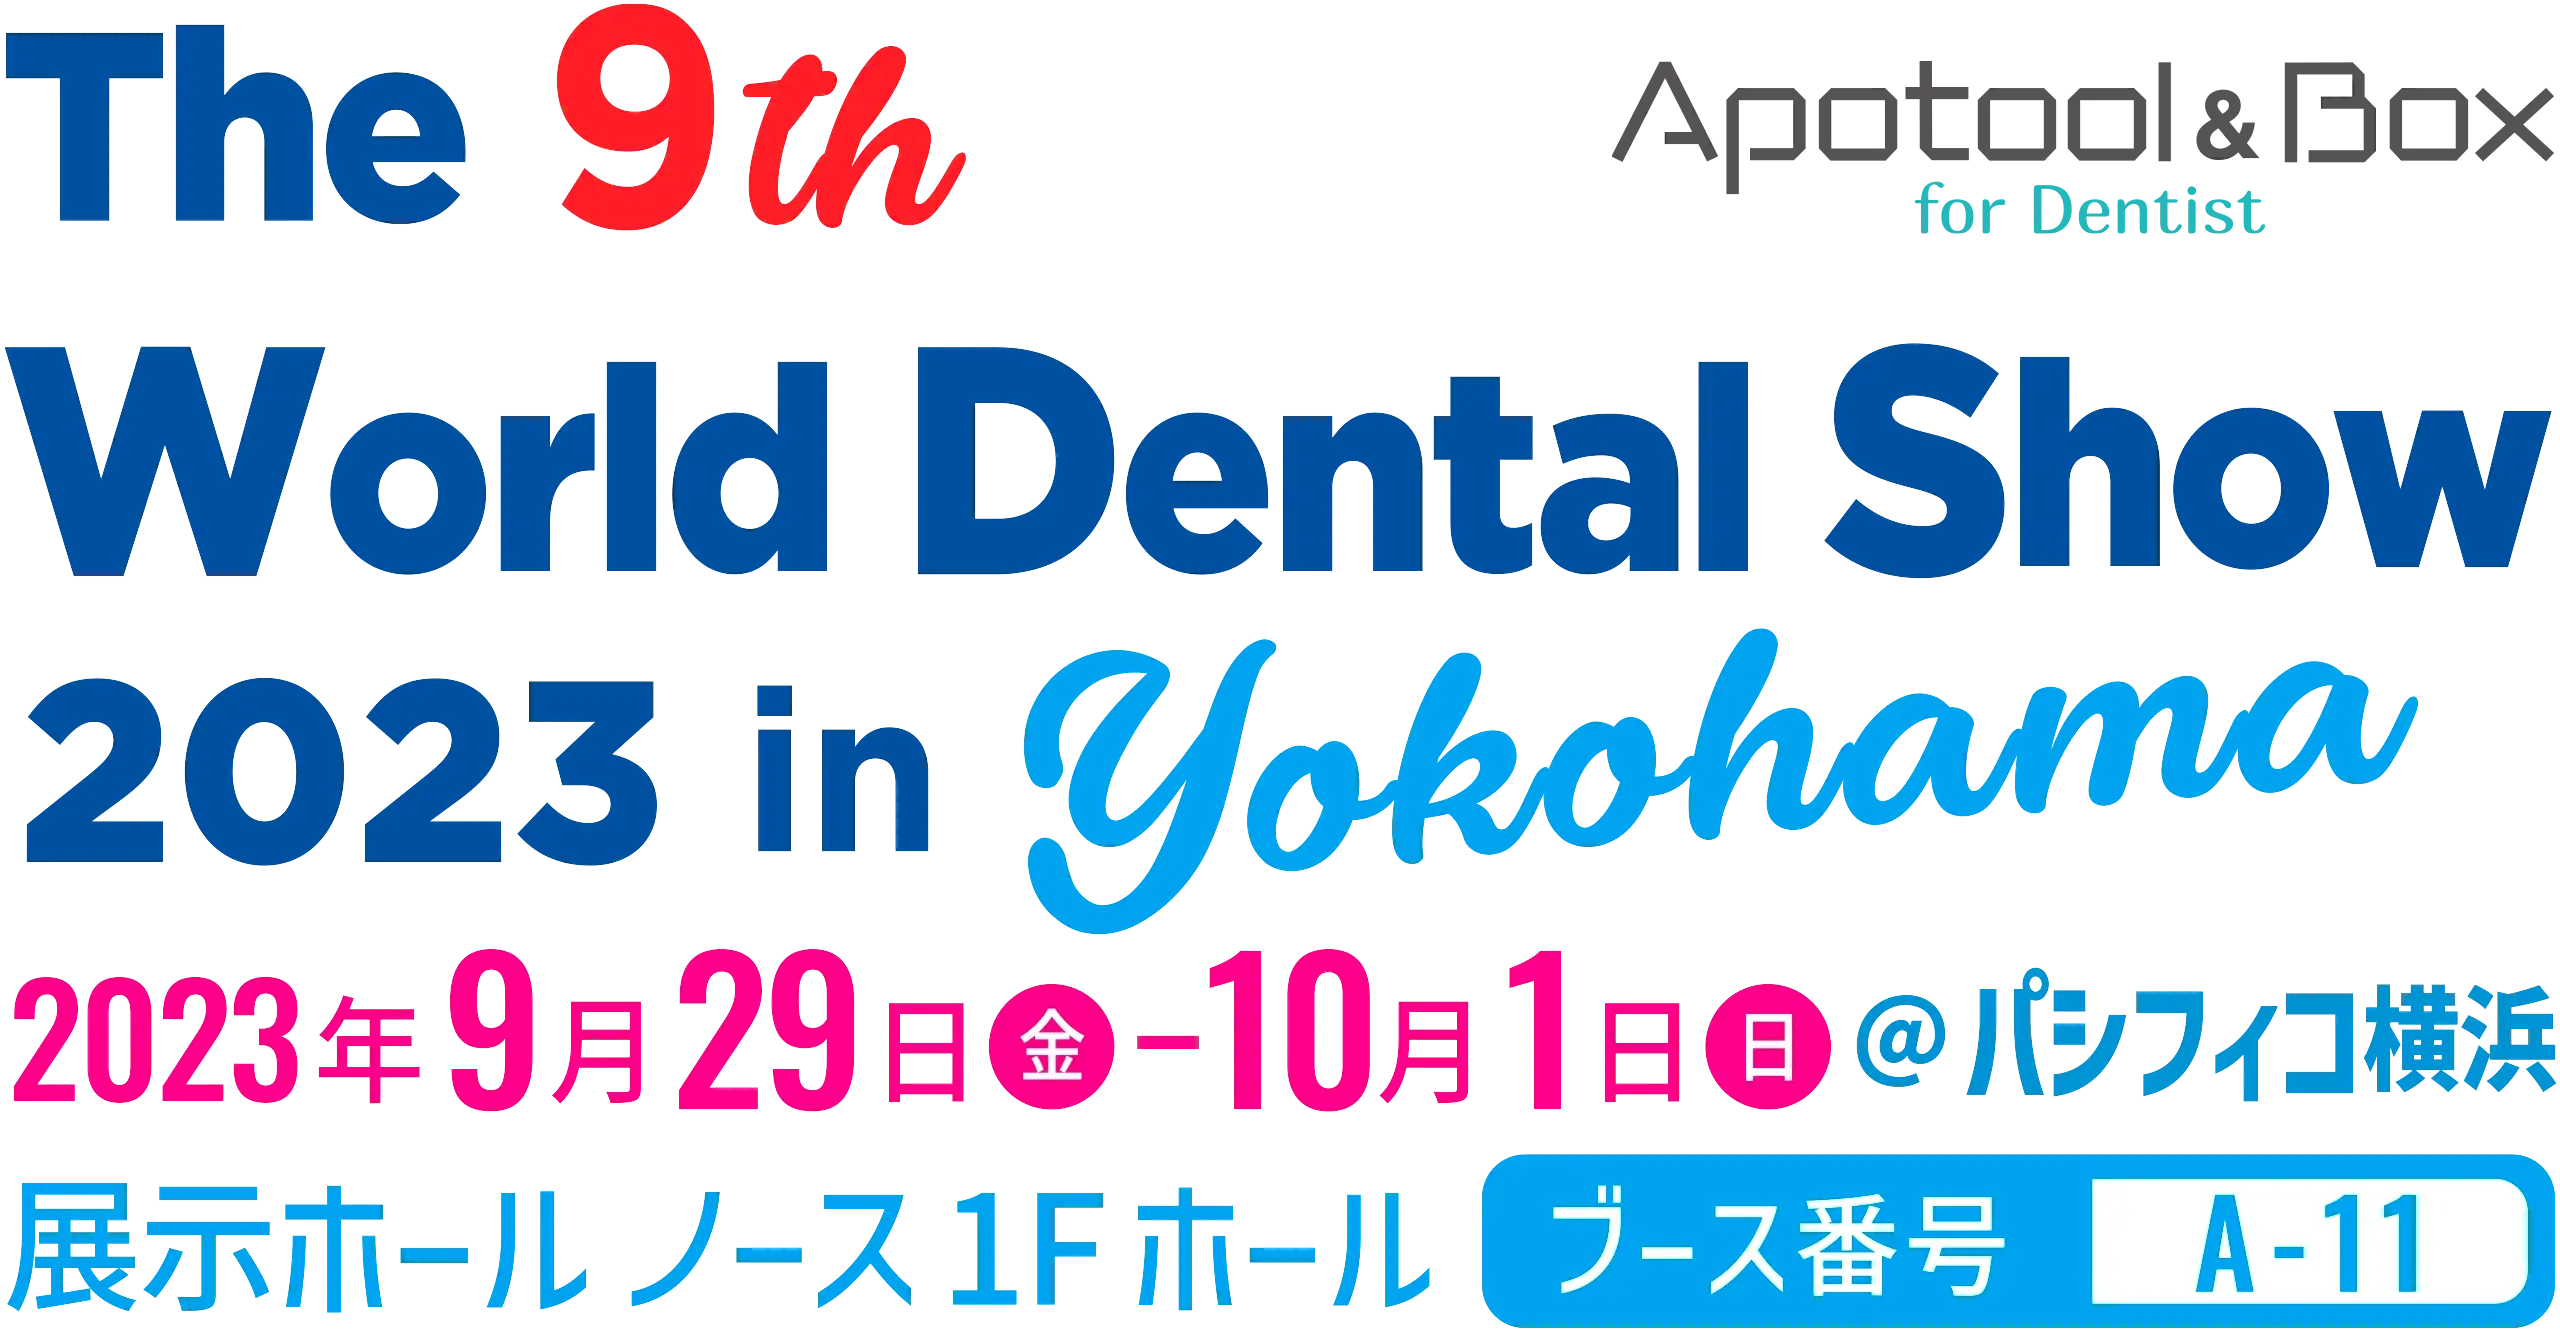 The 9th World Dental Show in Yokohama